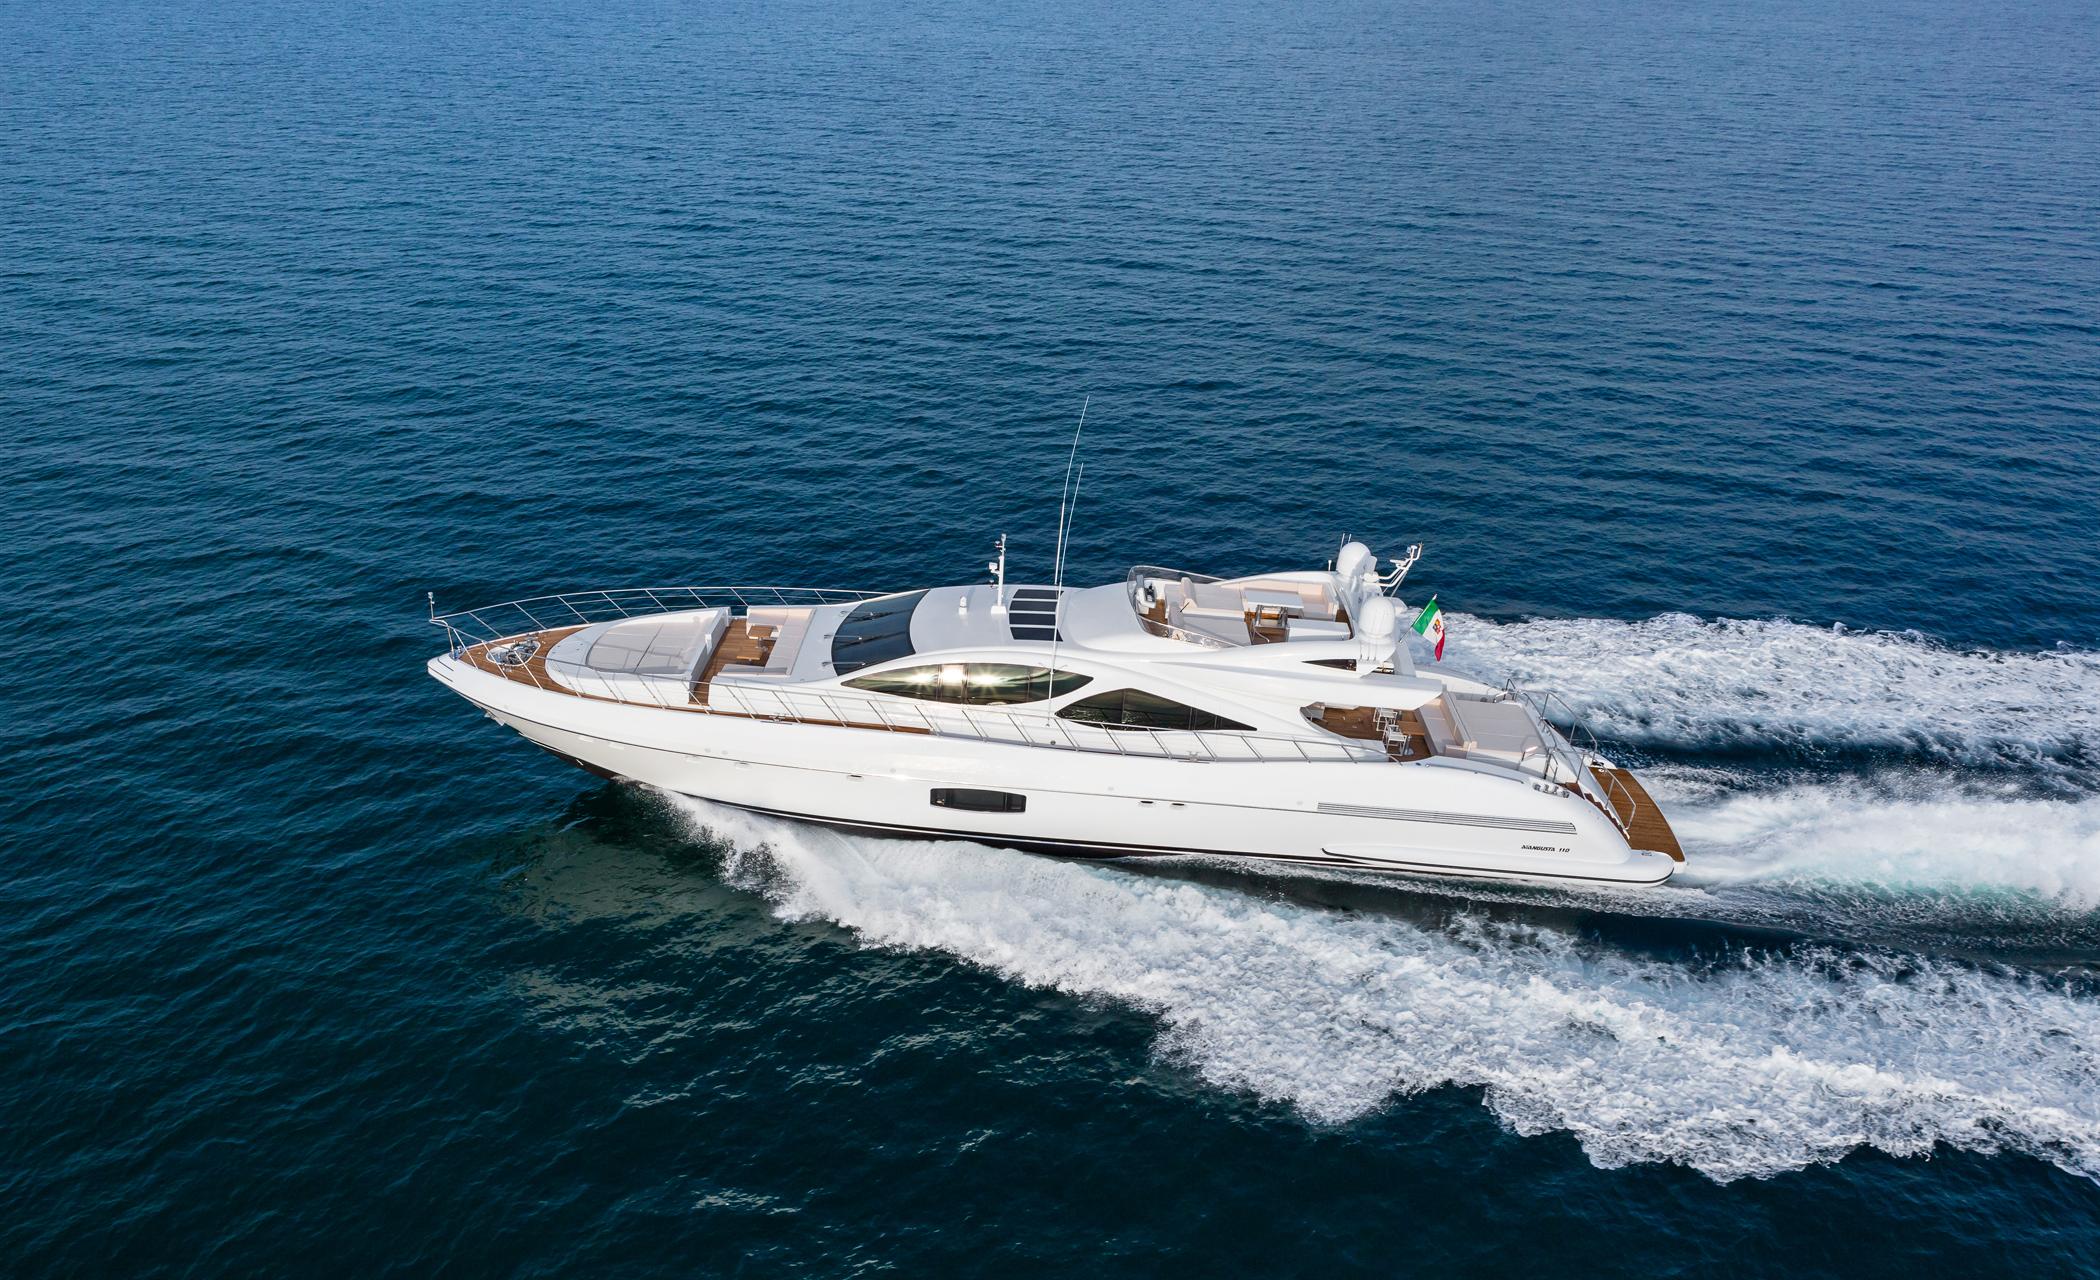 mangusta 110 yacht for sale